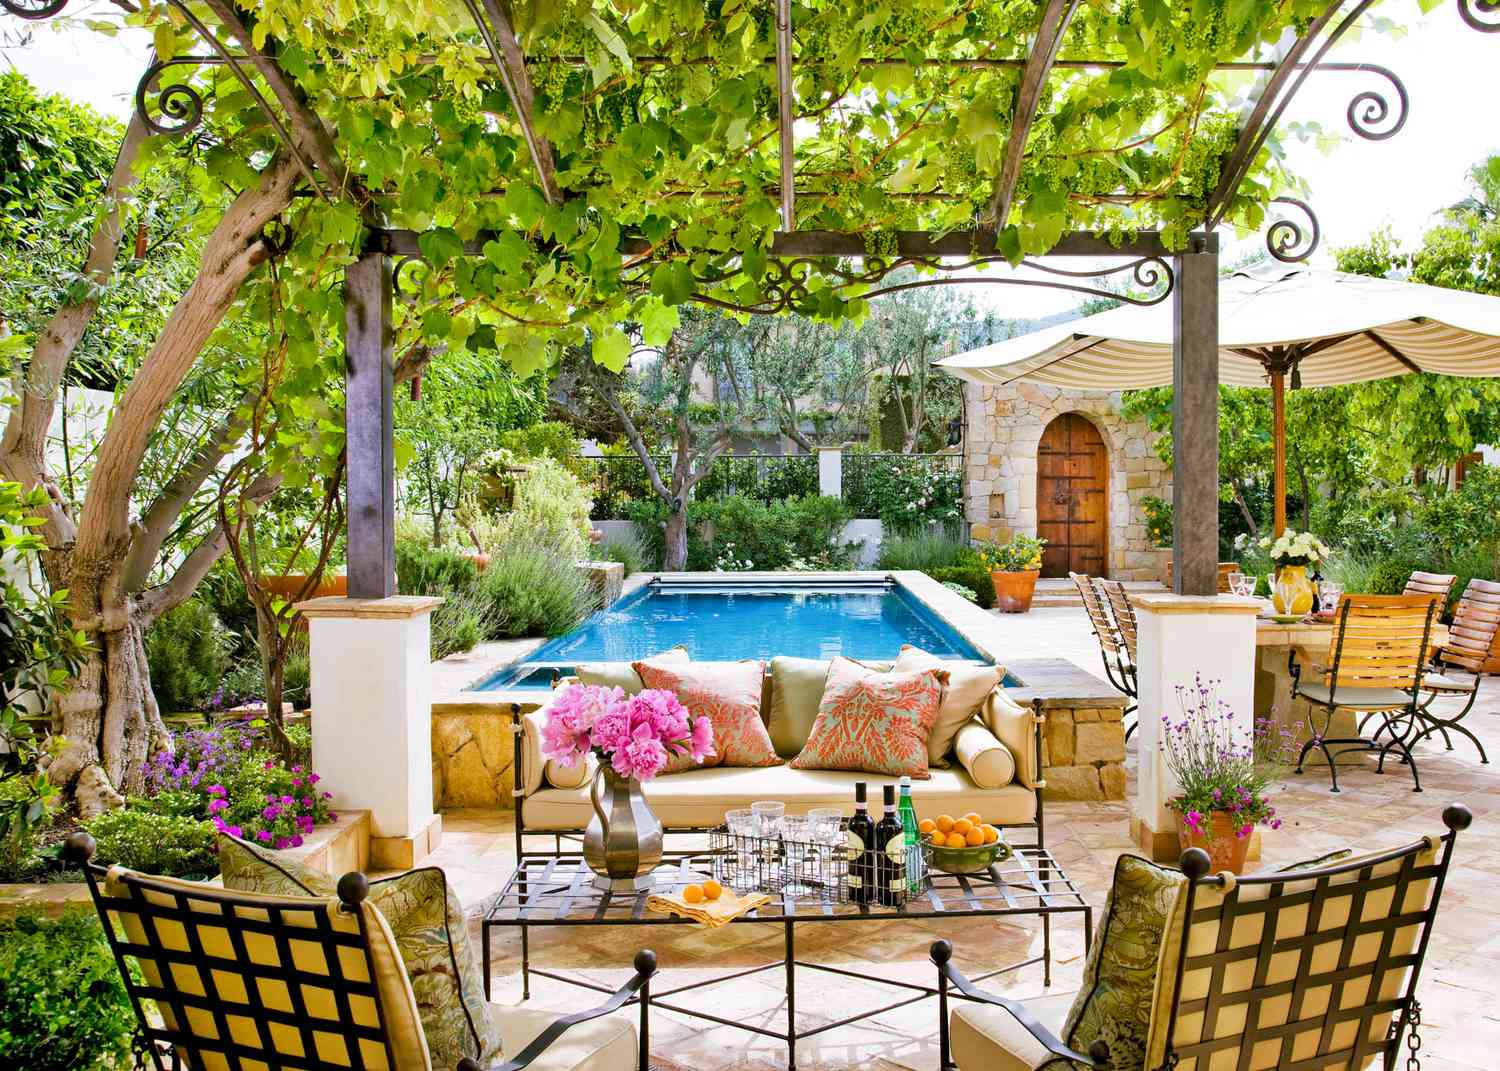 20 Ways to Create an Inviting Backyard Getaway   Better Homes ...